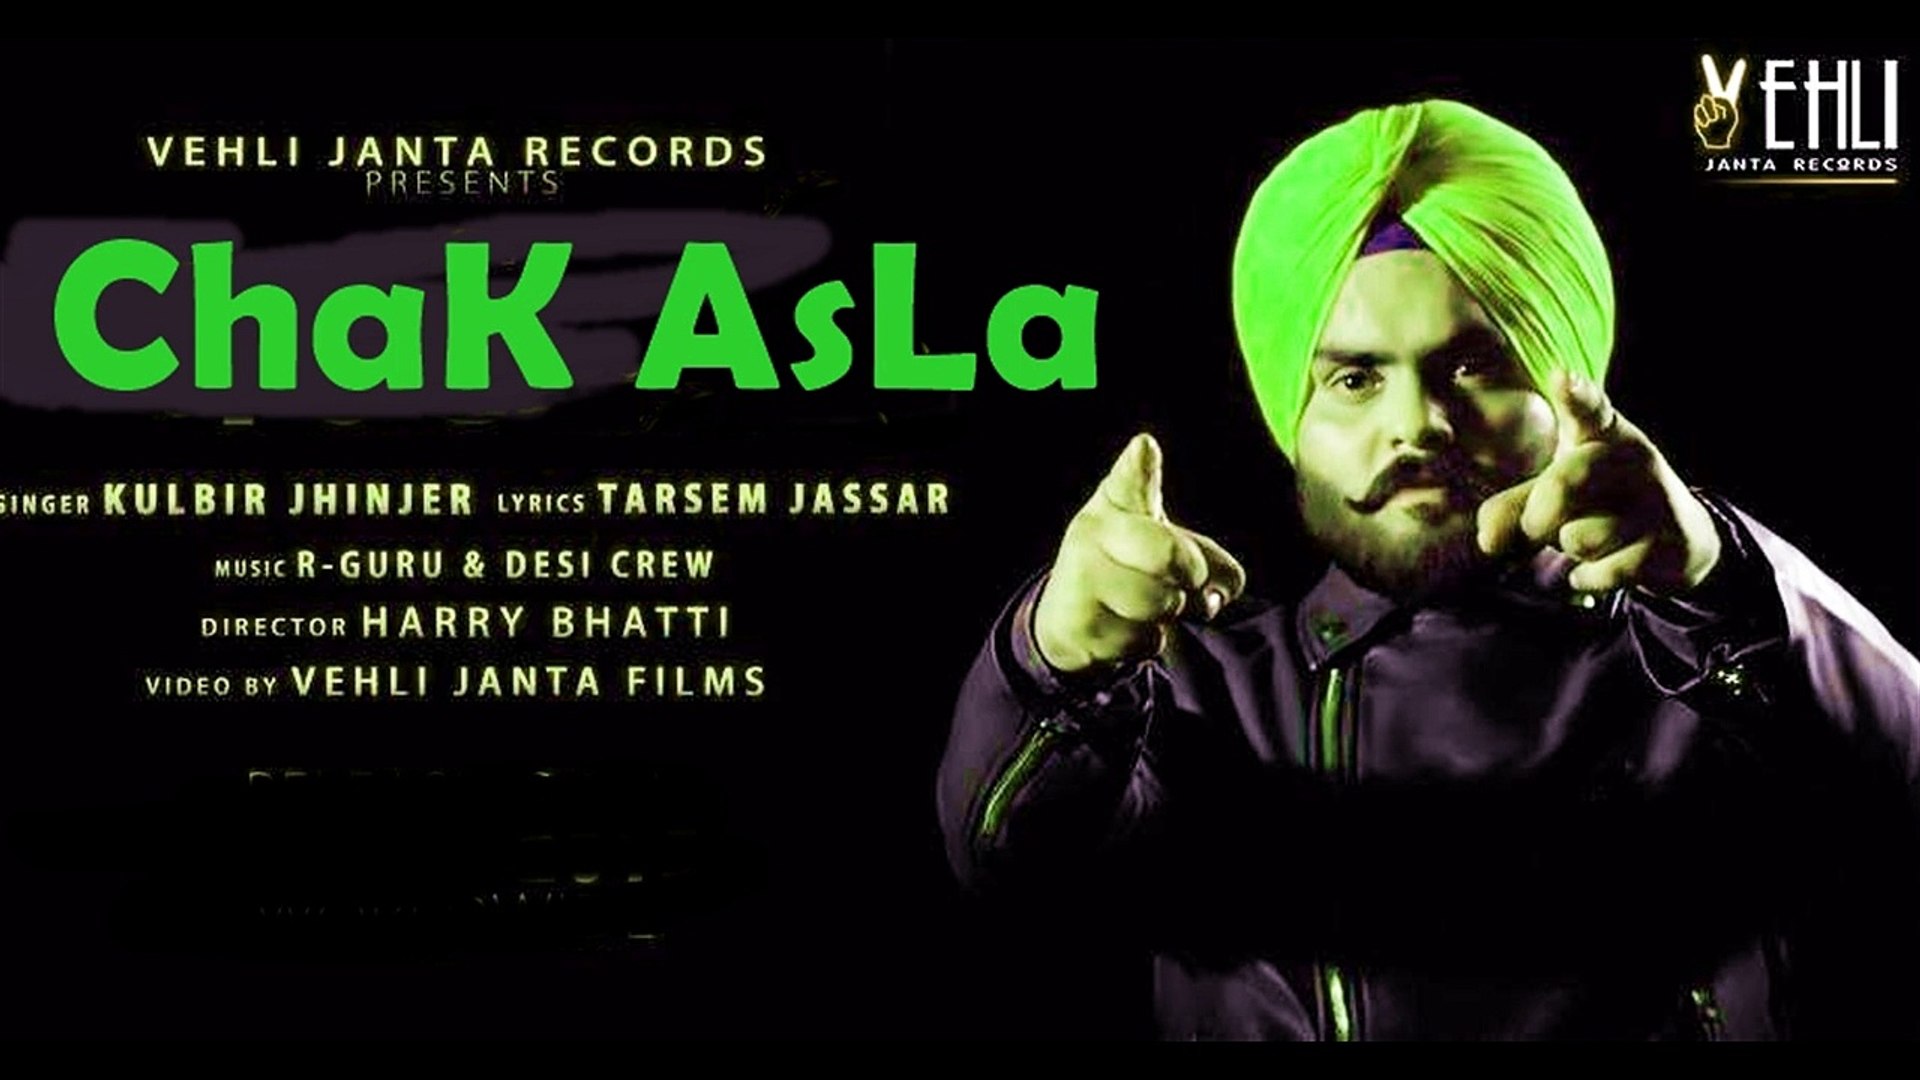 Chak Asla - Kulbir Jhinjer - Lyrics Tarsem Jassar - Sardarni - New Punjabi  Song 2015 - video Dailymotion